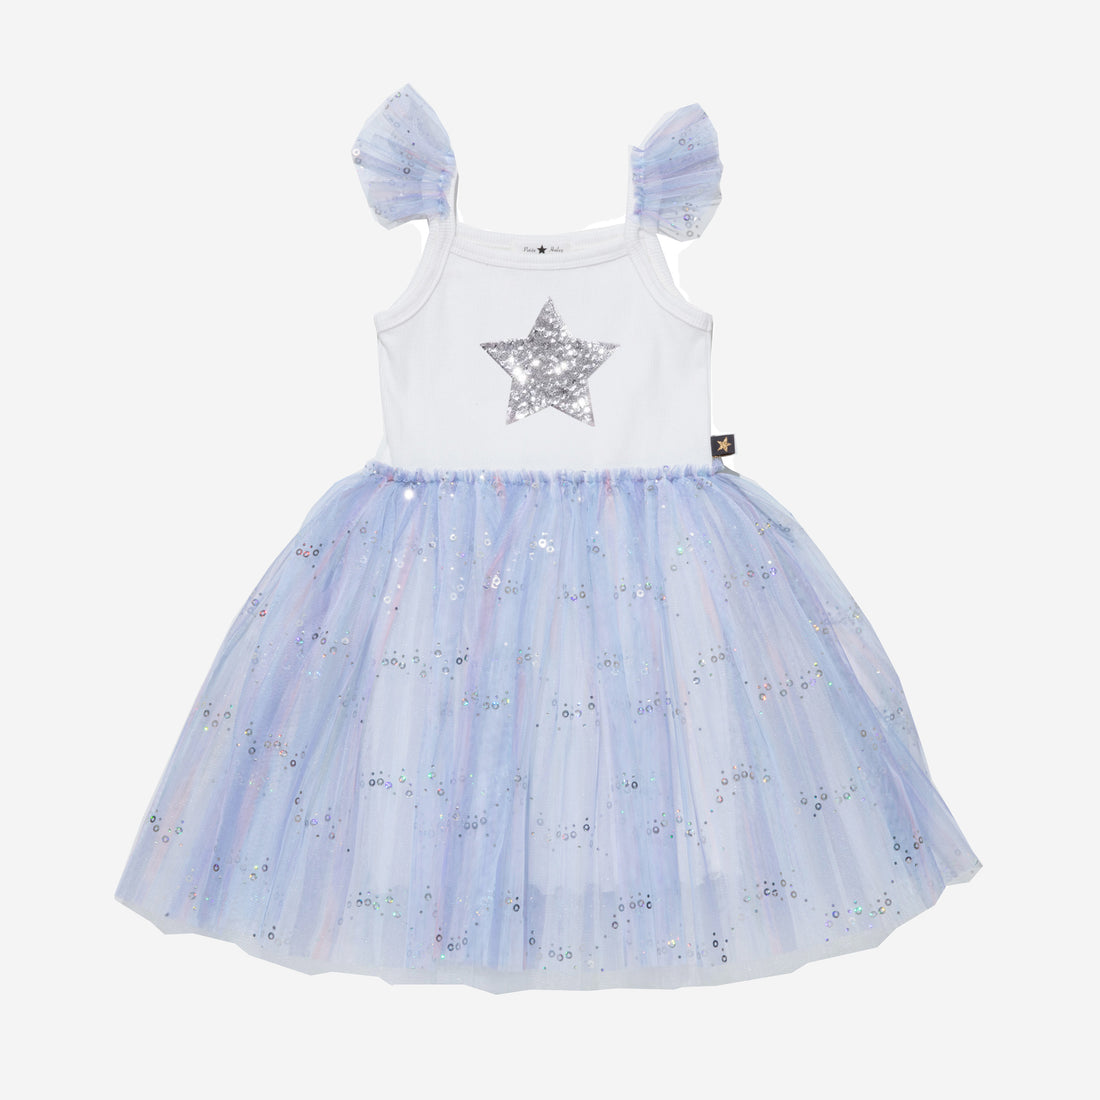 blue spangle tutu dress with silver glitter star